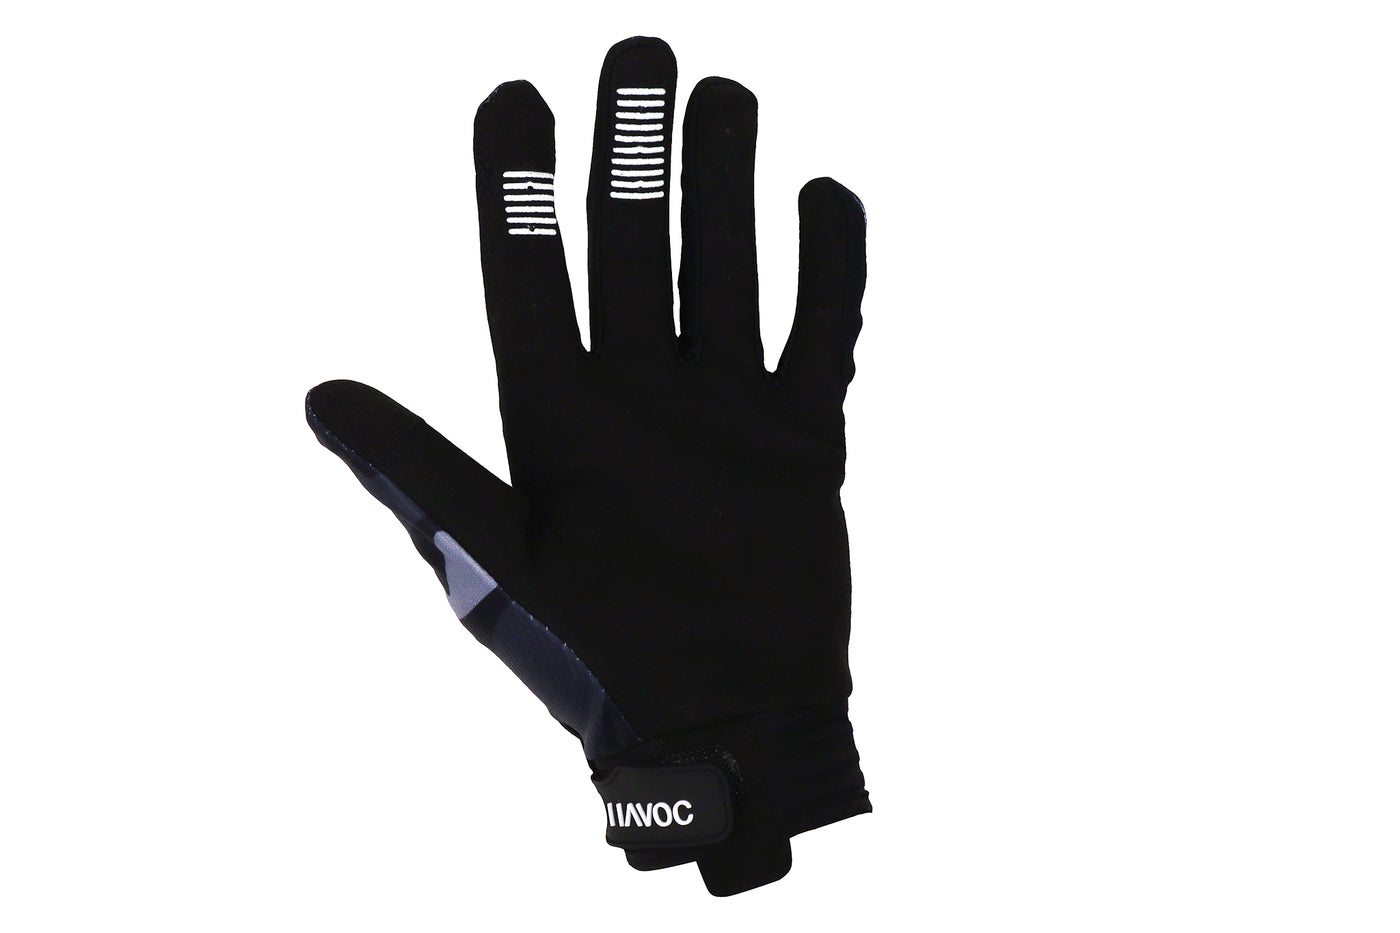 Stealth Camo Gloves